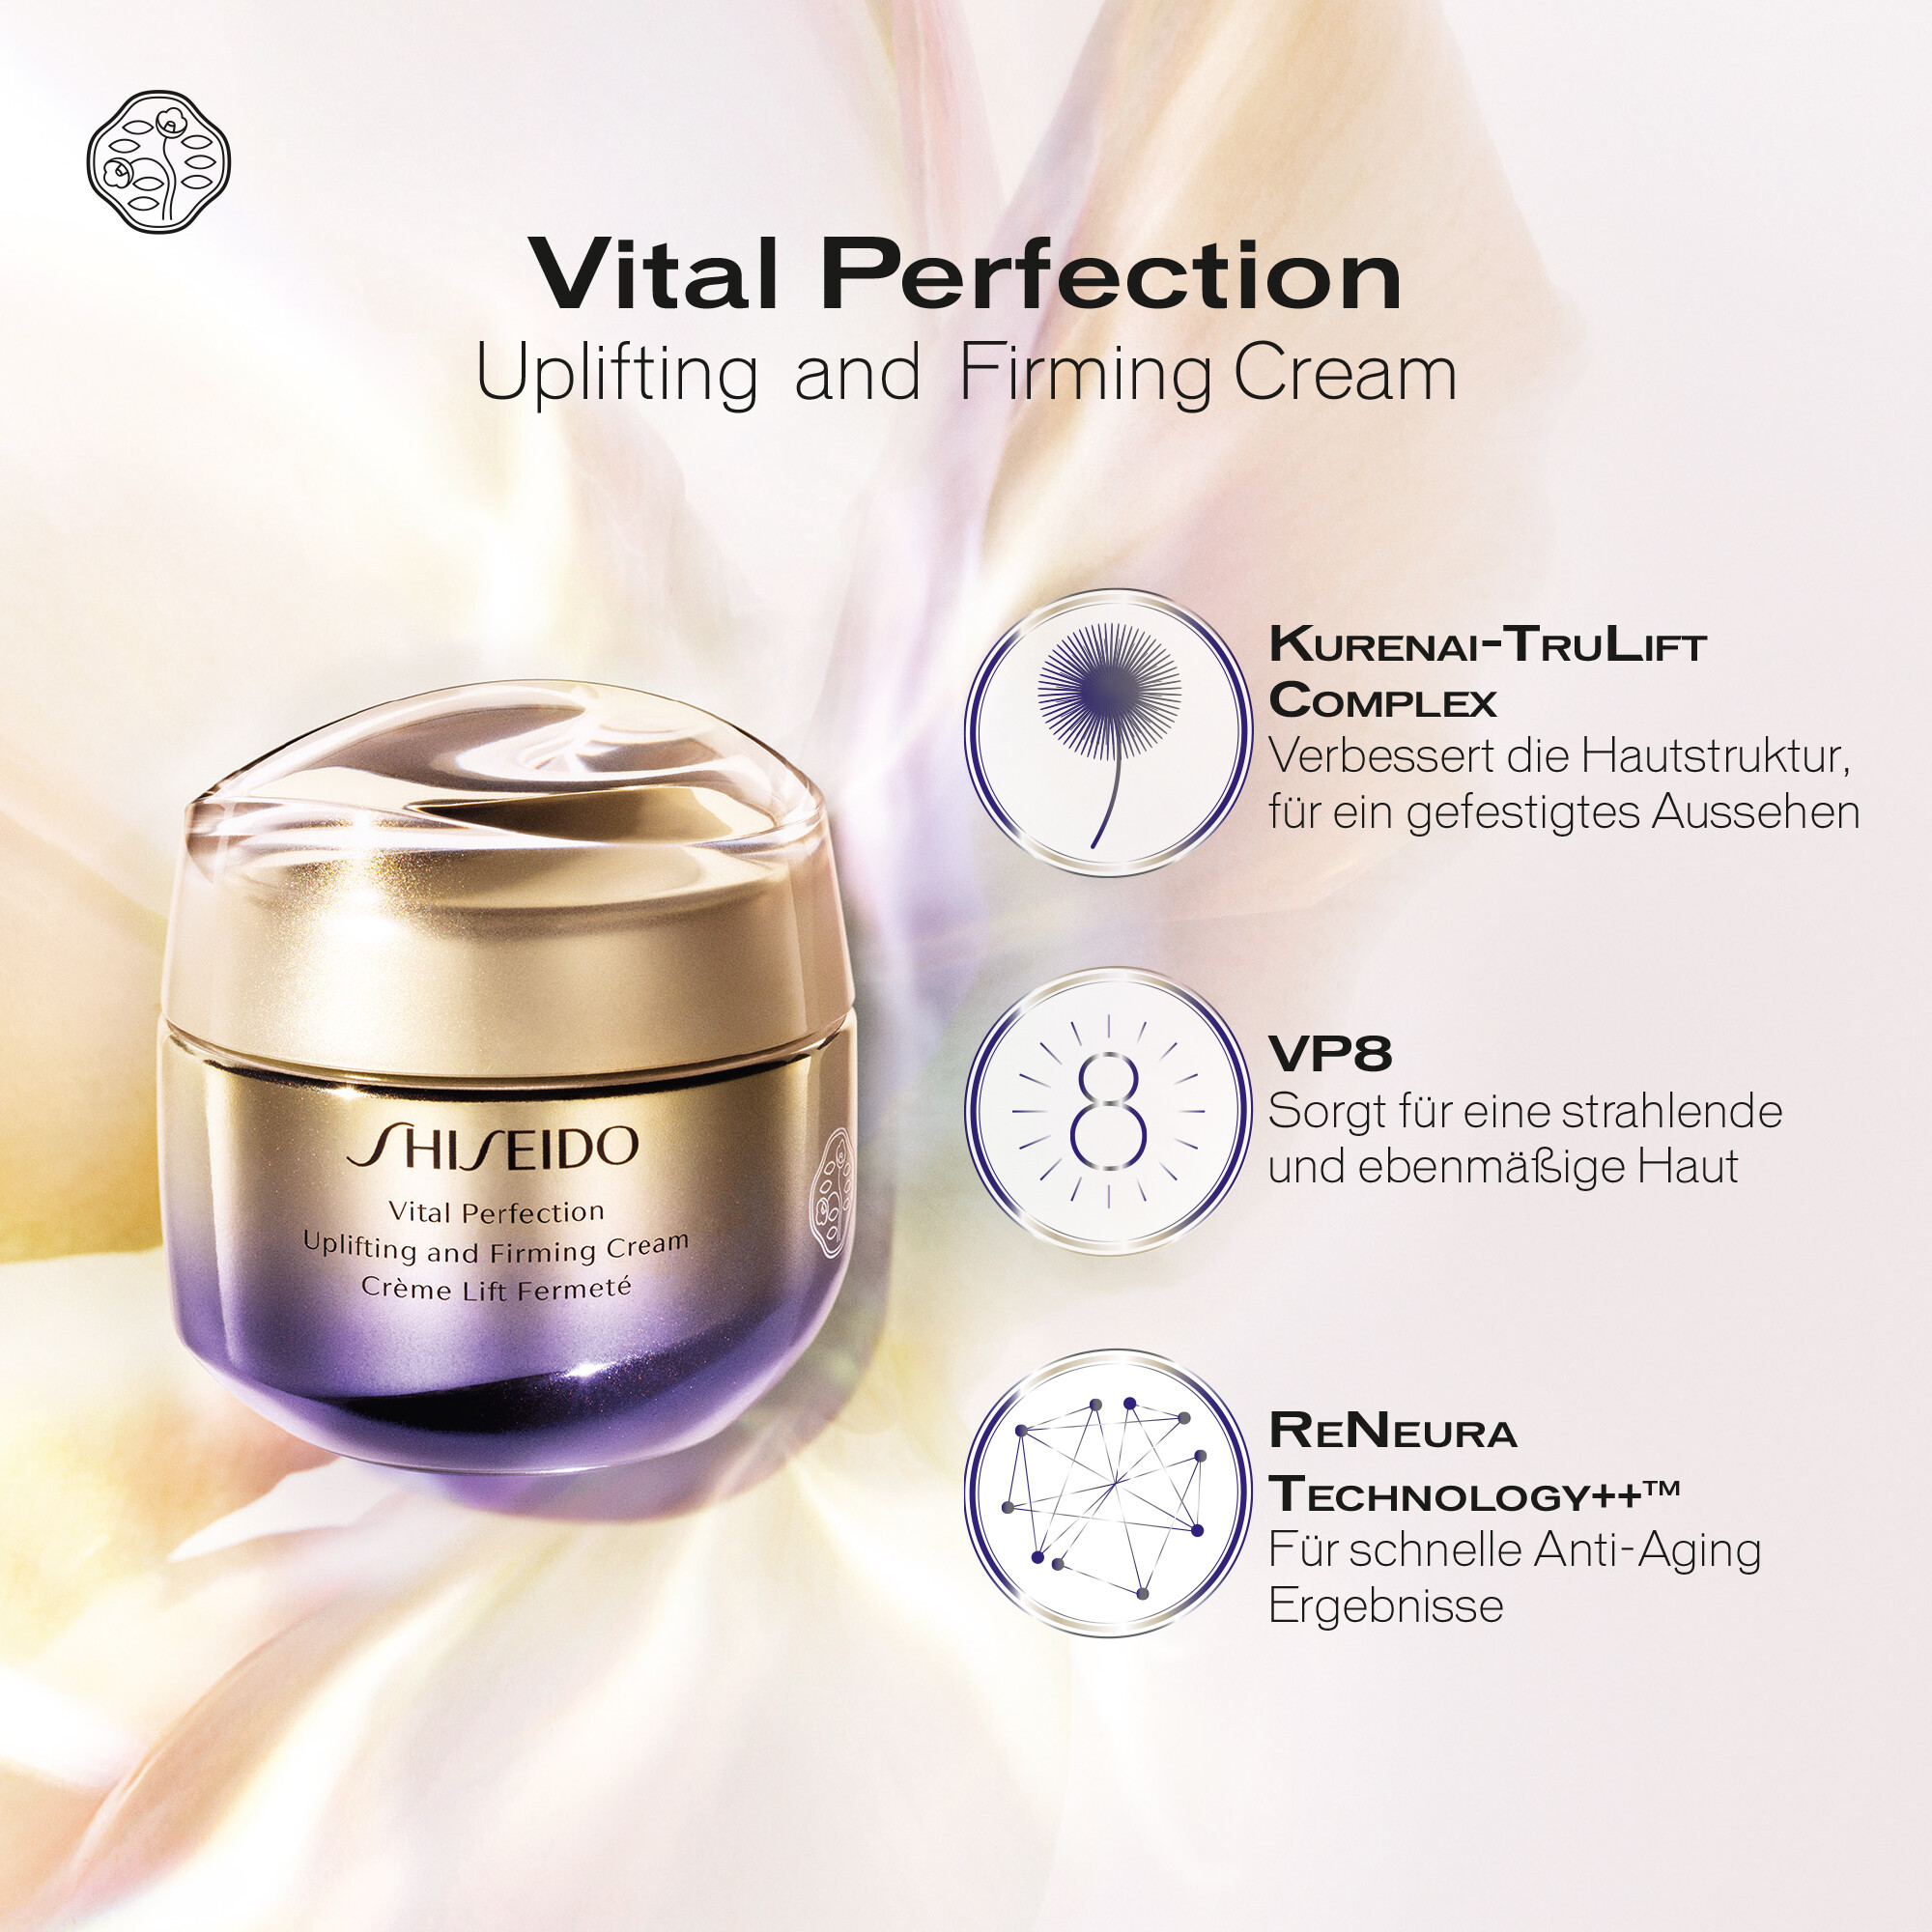 Tagescreme Shiseido Vital Perfection Uplifting und Firming 50ml kaufen